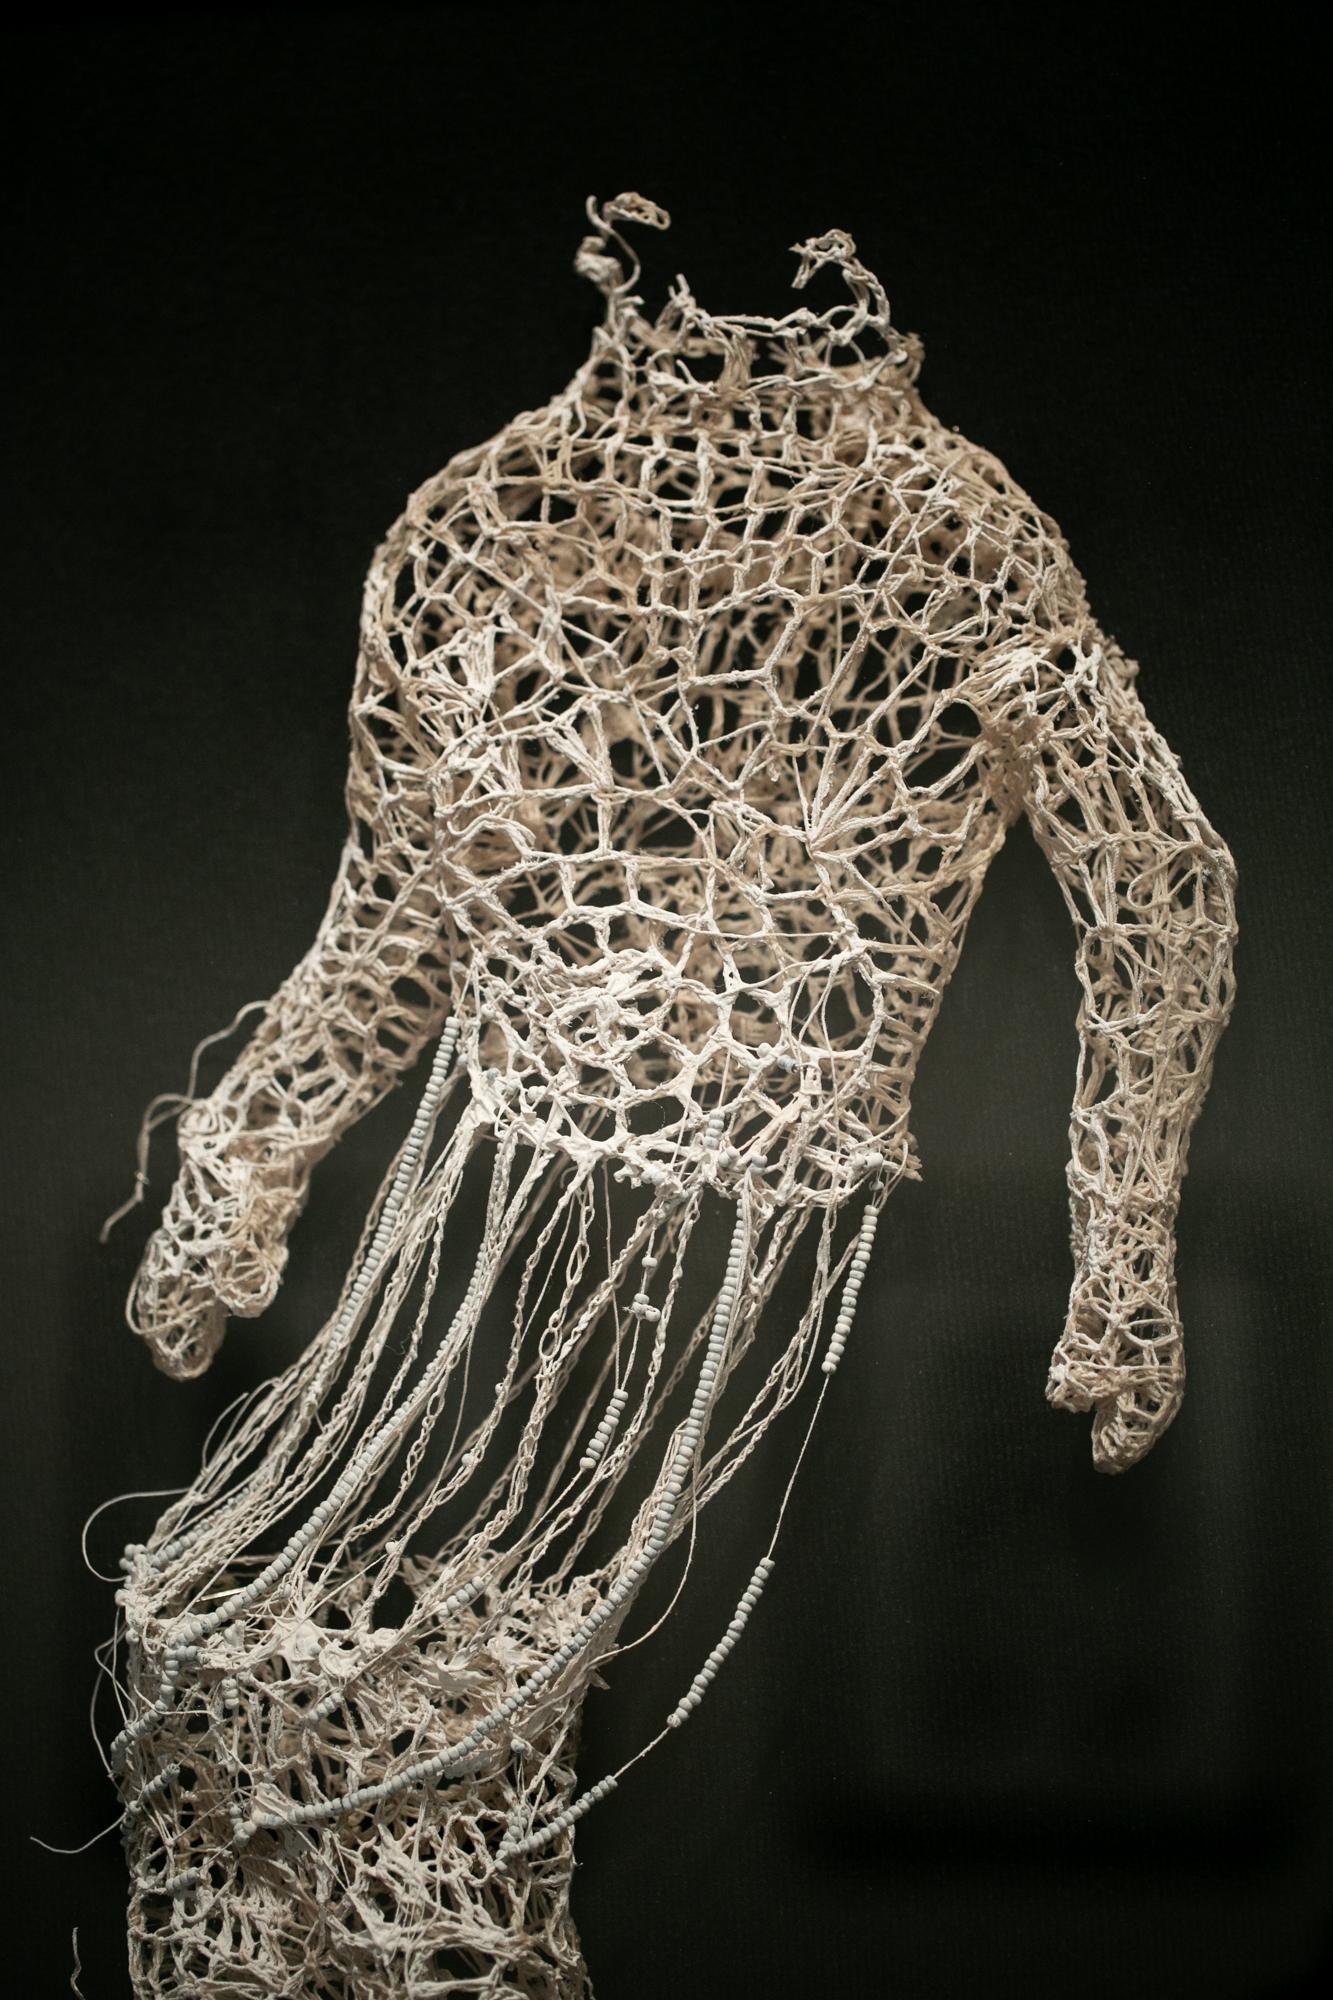 crochet wire sculpture